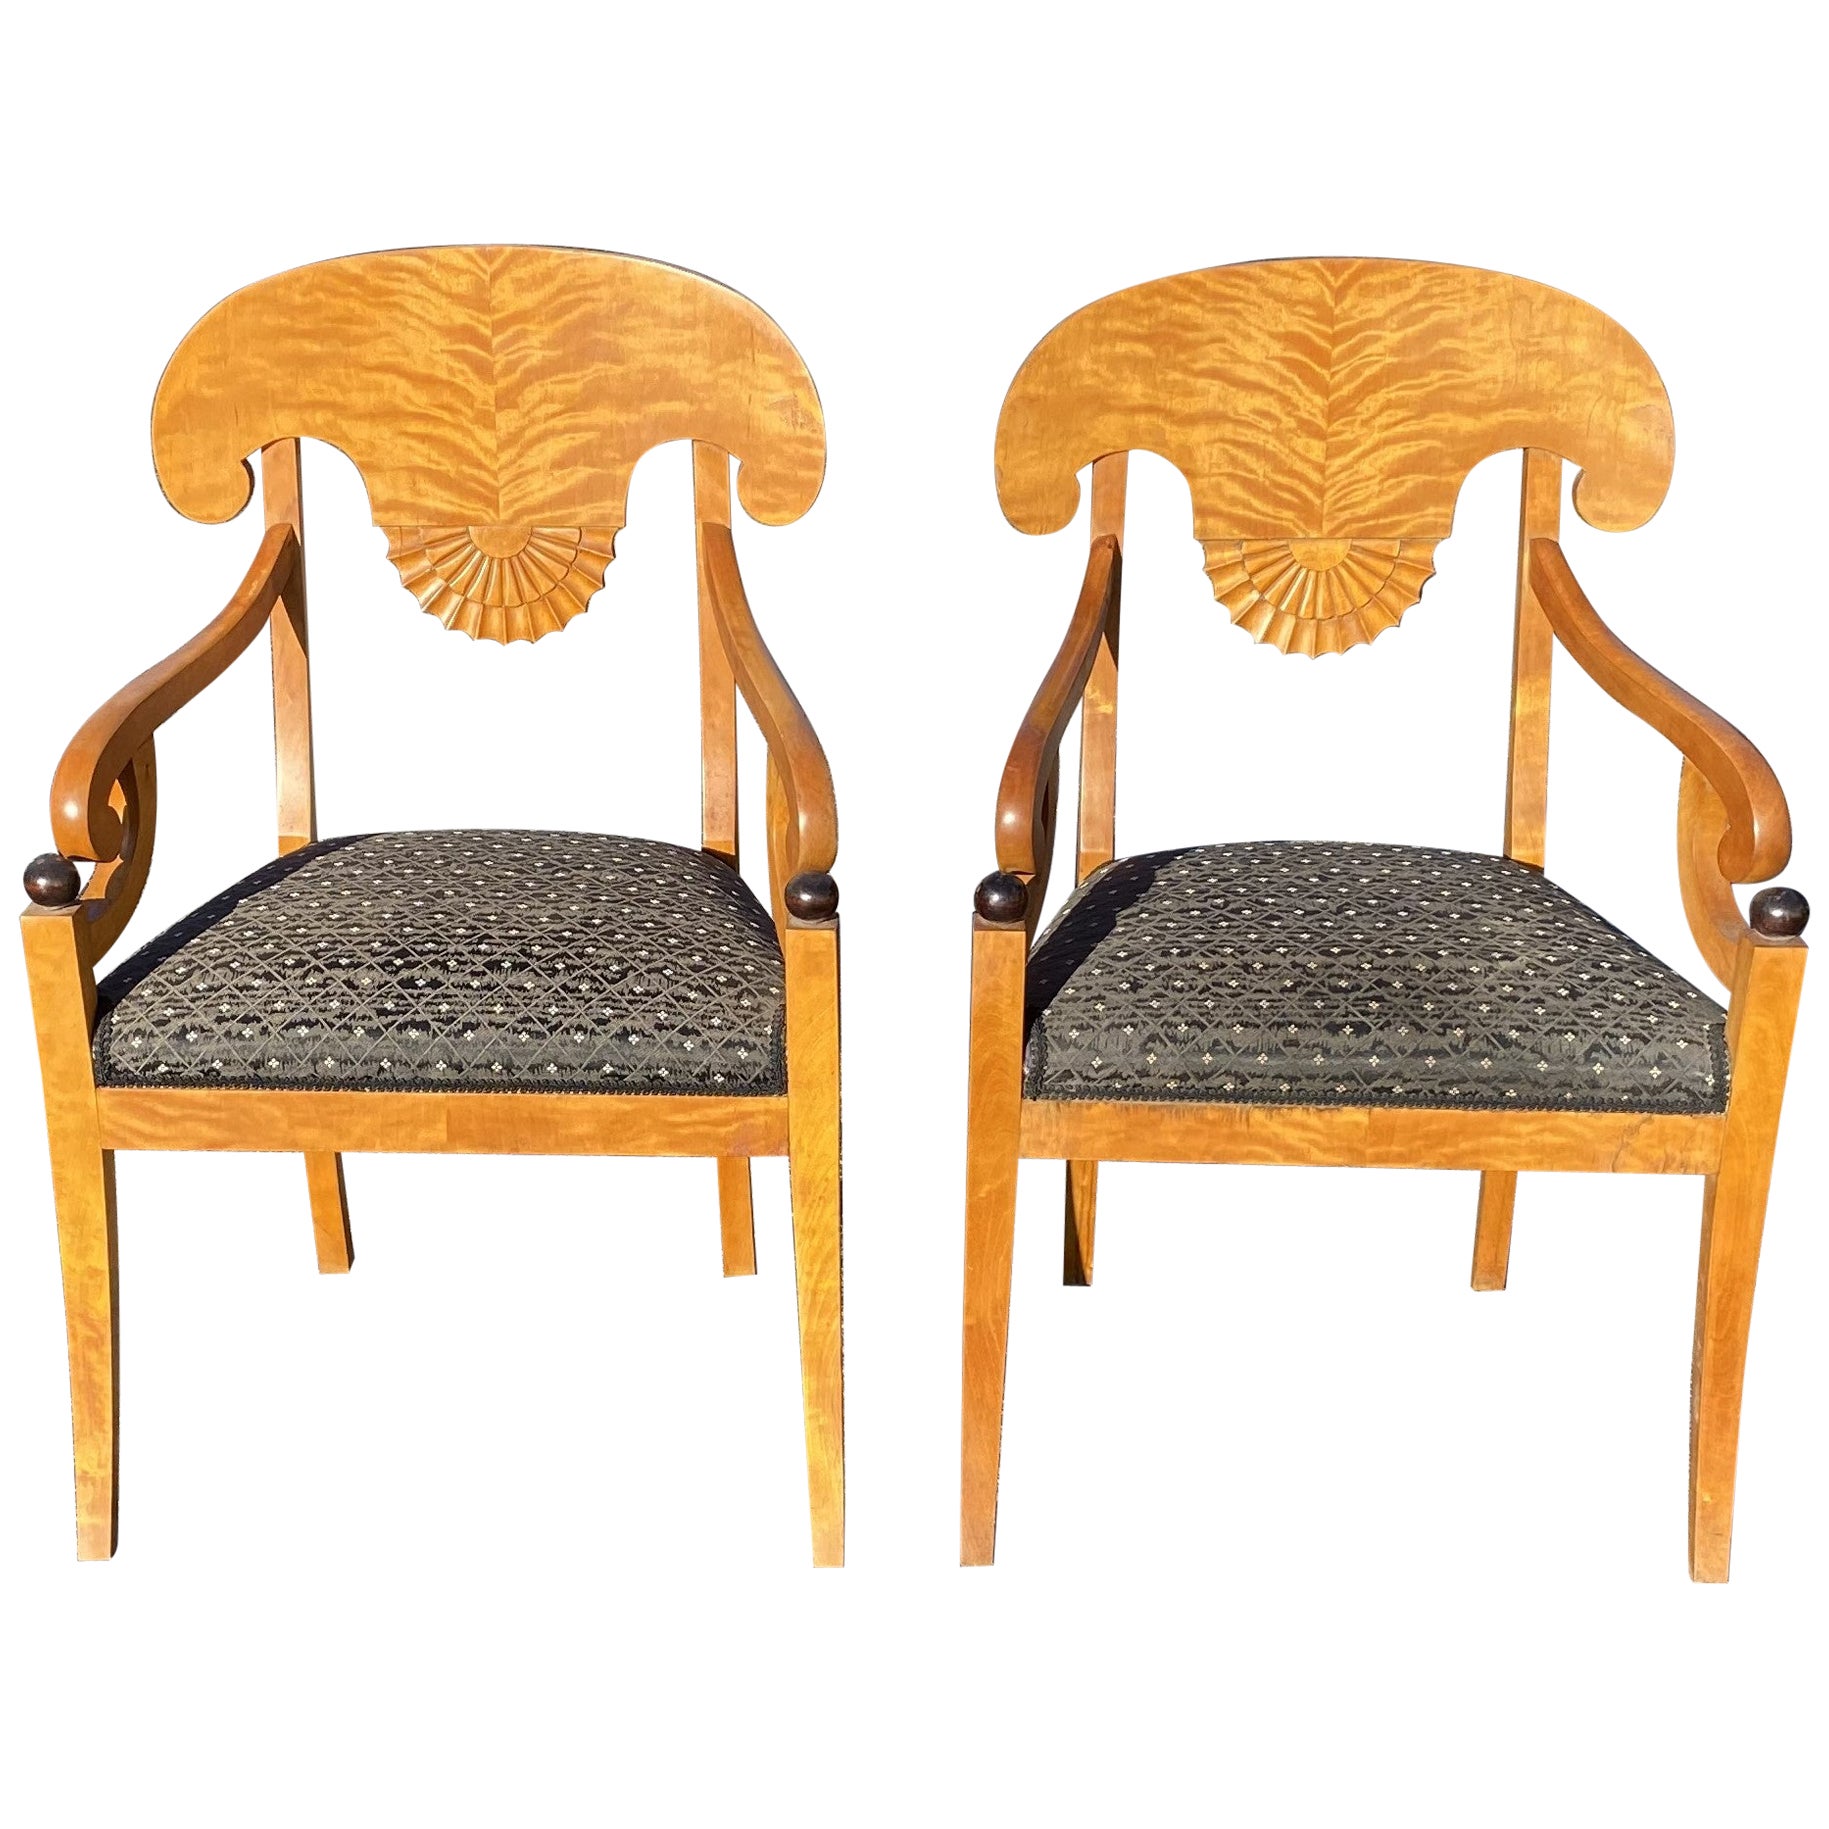 Pair of Satin Birch Biedermeier Style Armchairs with Radial Fan Carvings